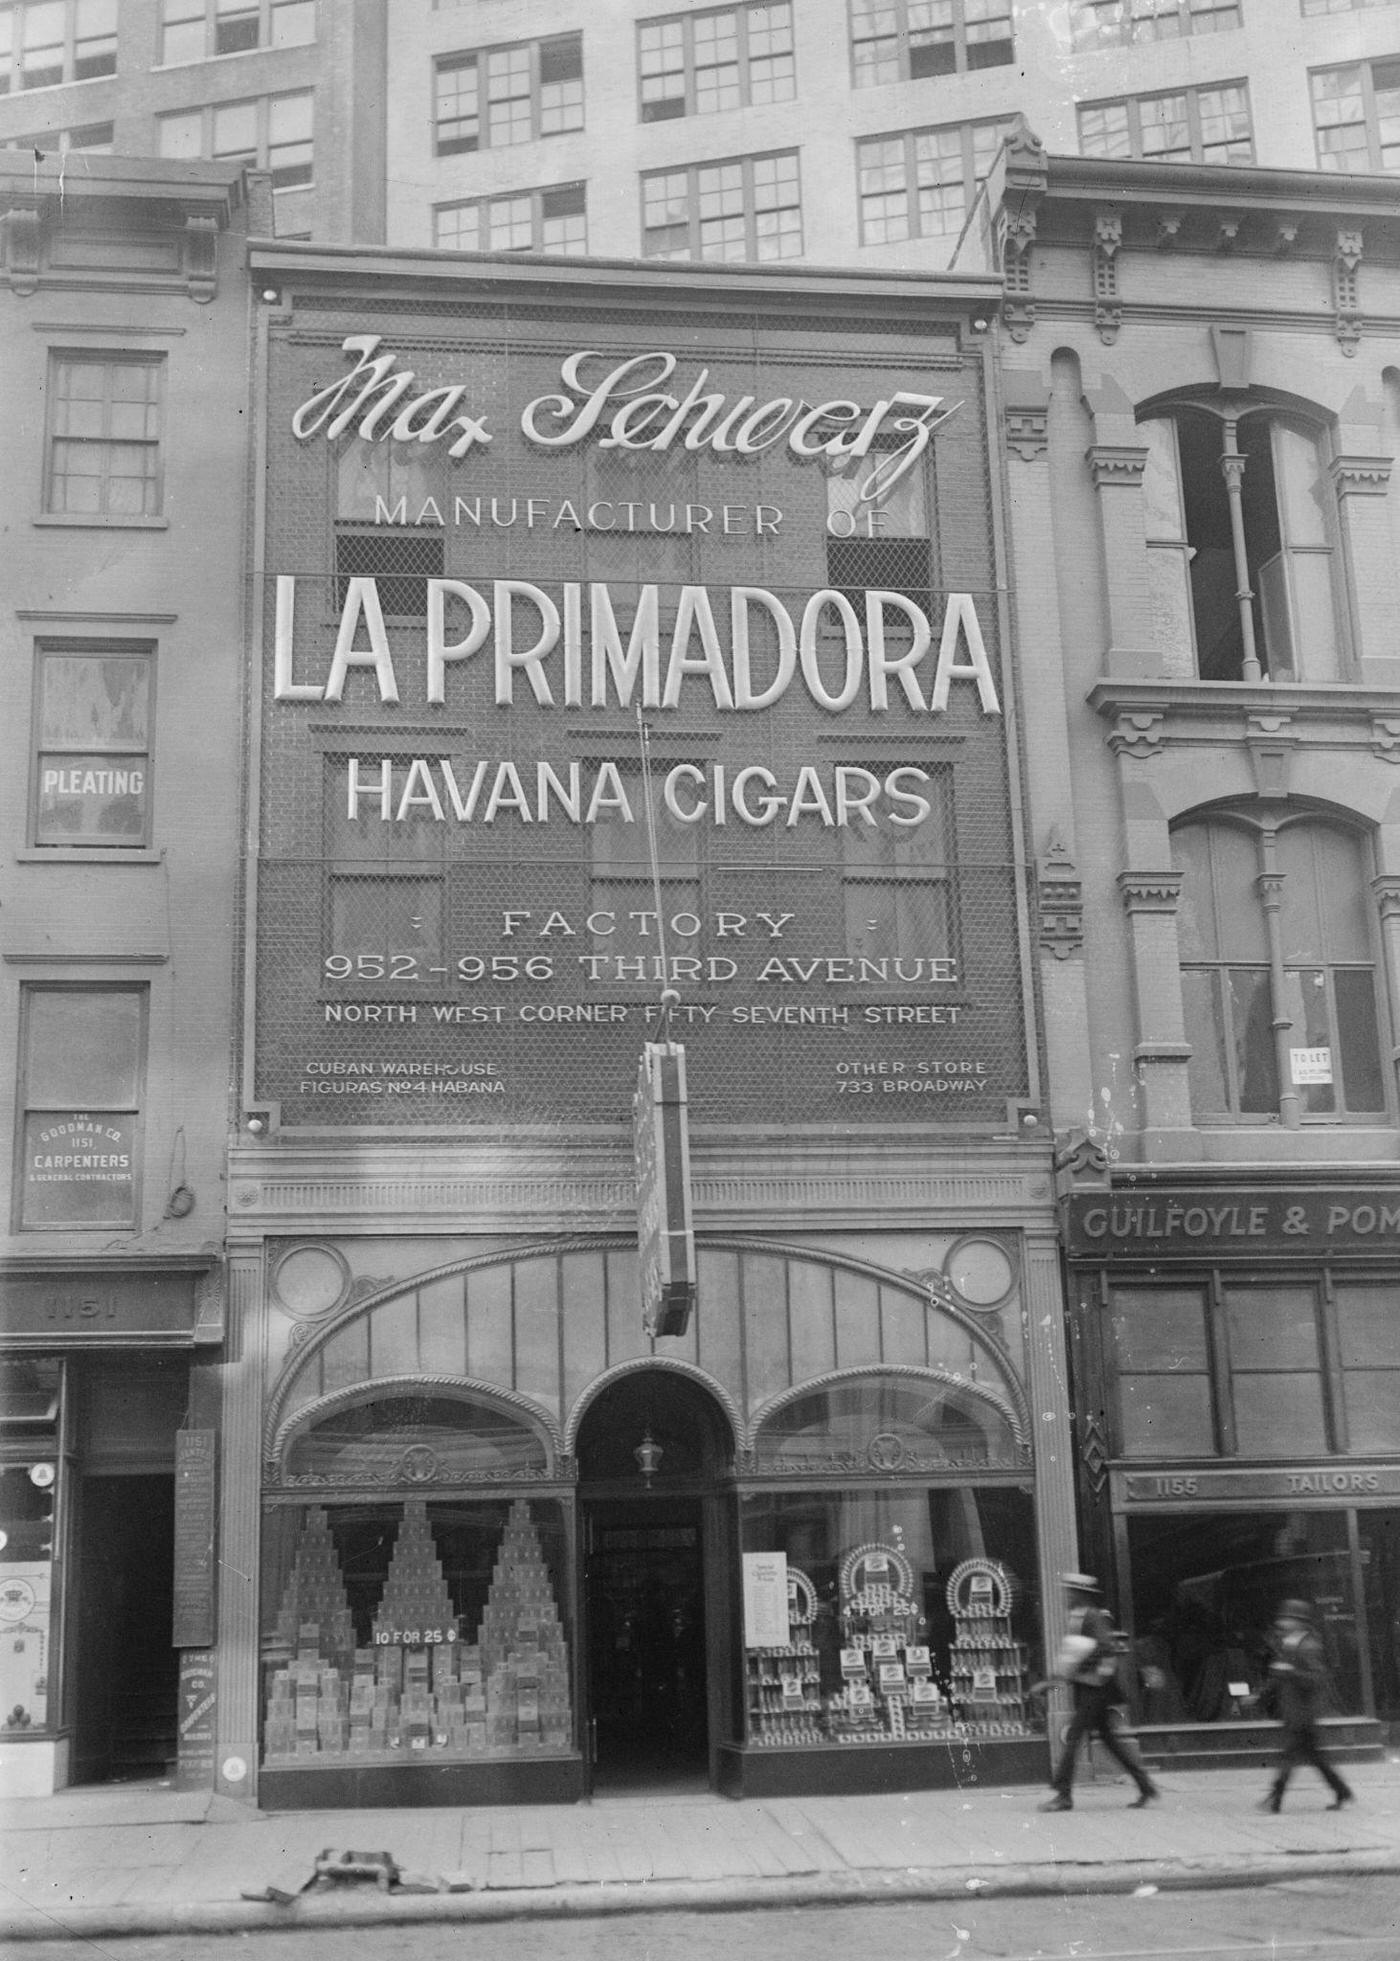 Max Schwartz'S Primadora Havana Cigars, 3Rd Avenue, New York City, Circa 1900